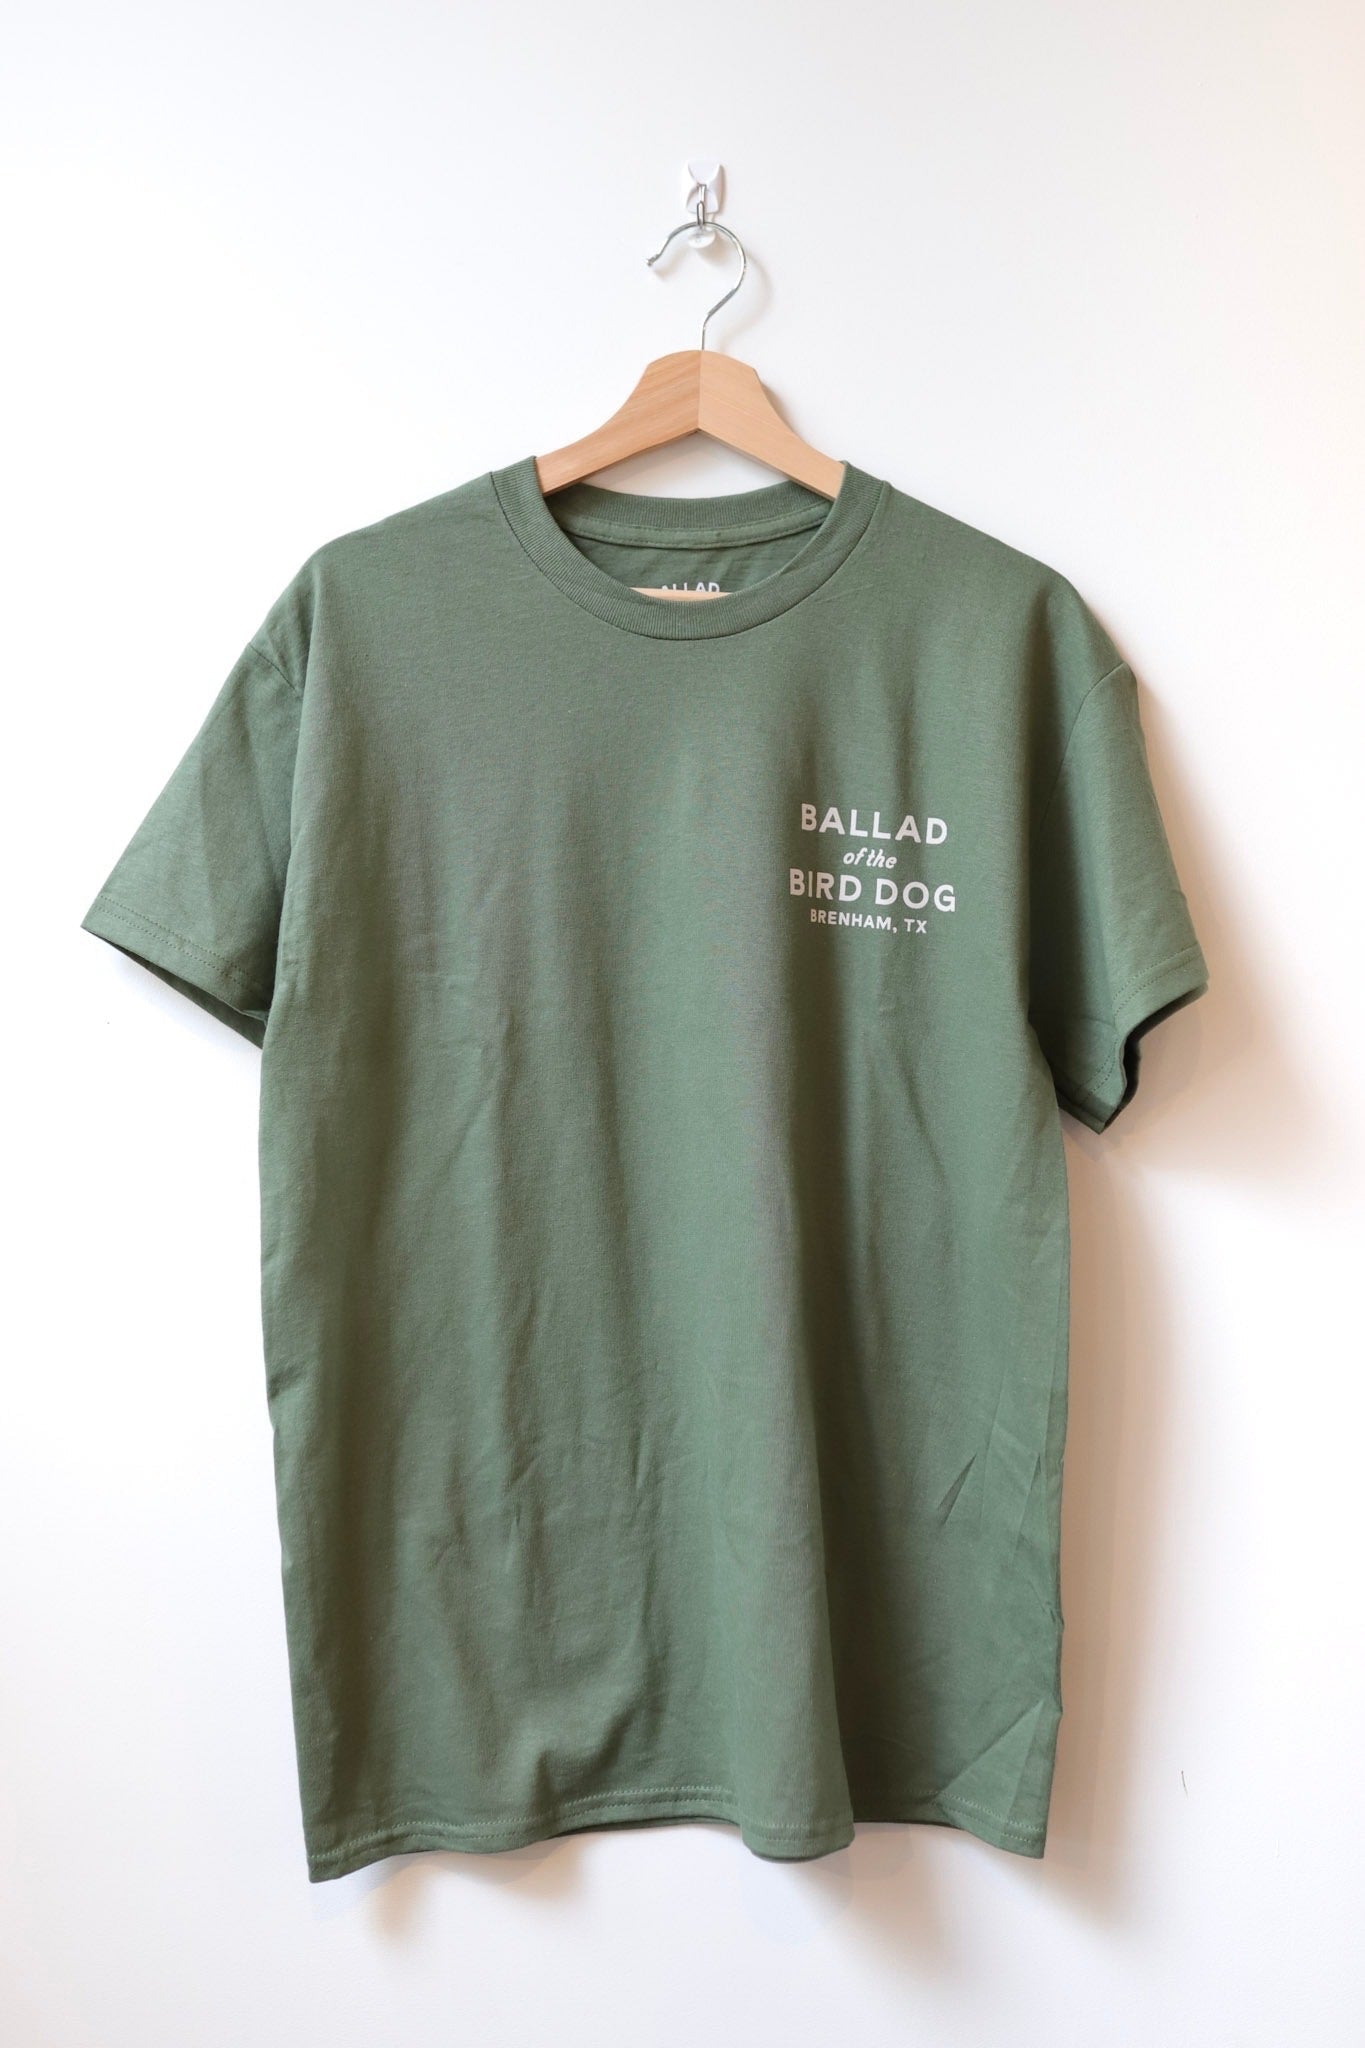 Green t Shirt With ’bado’ Printed, Bird Dog Classic Shop Logo